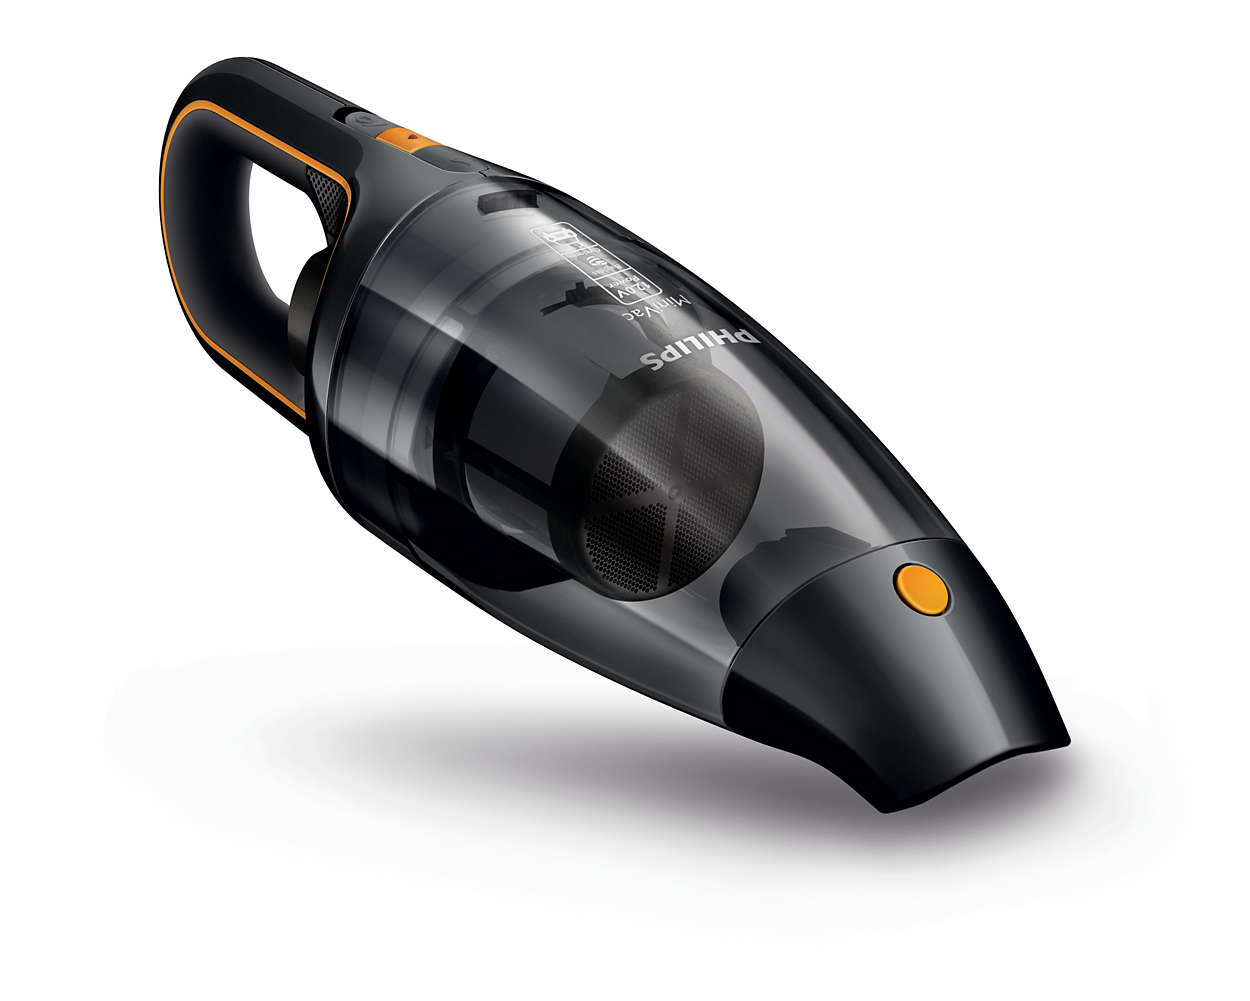 Image result for handheld vacuum cleaner